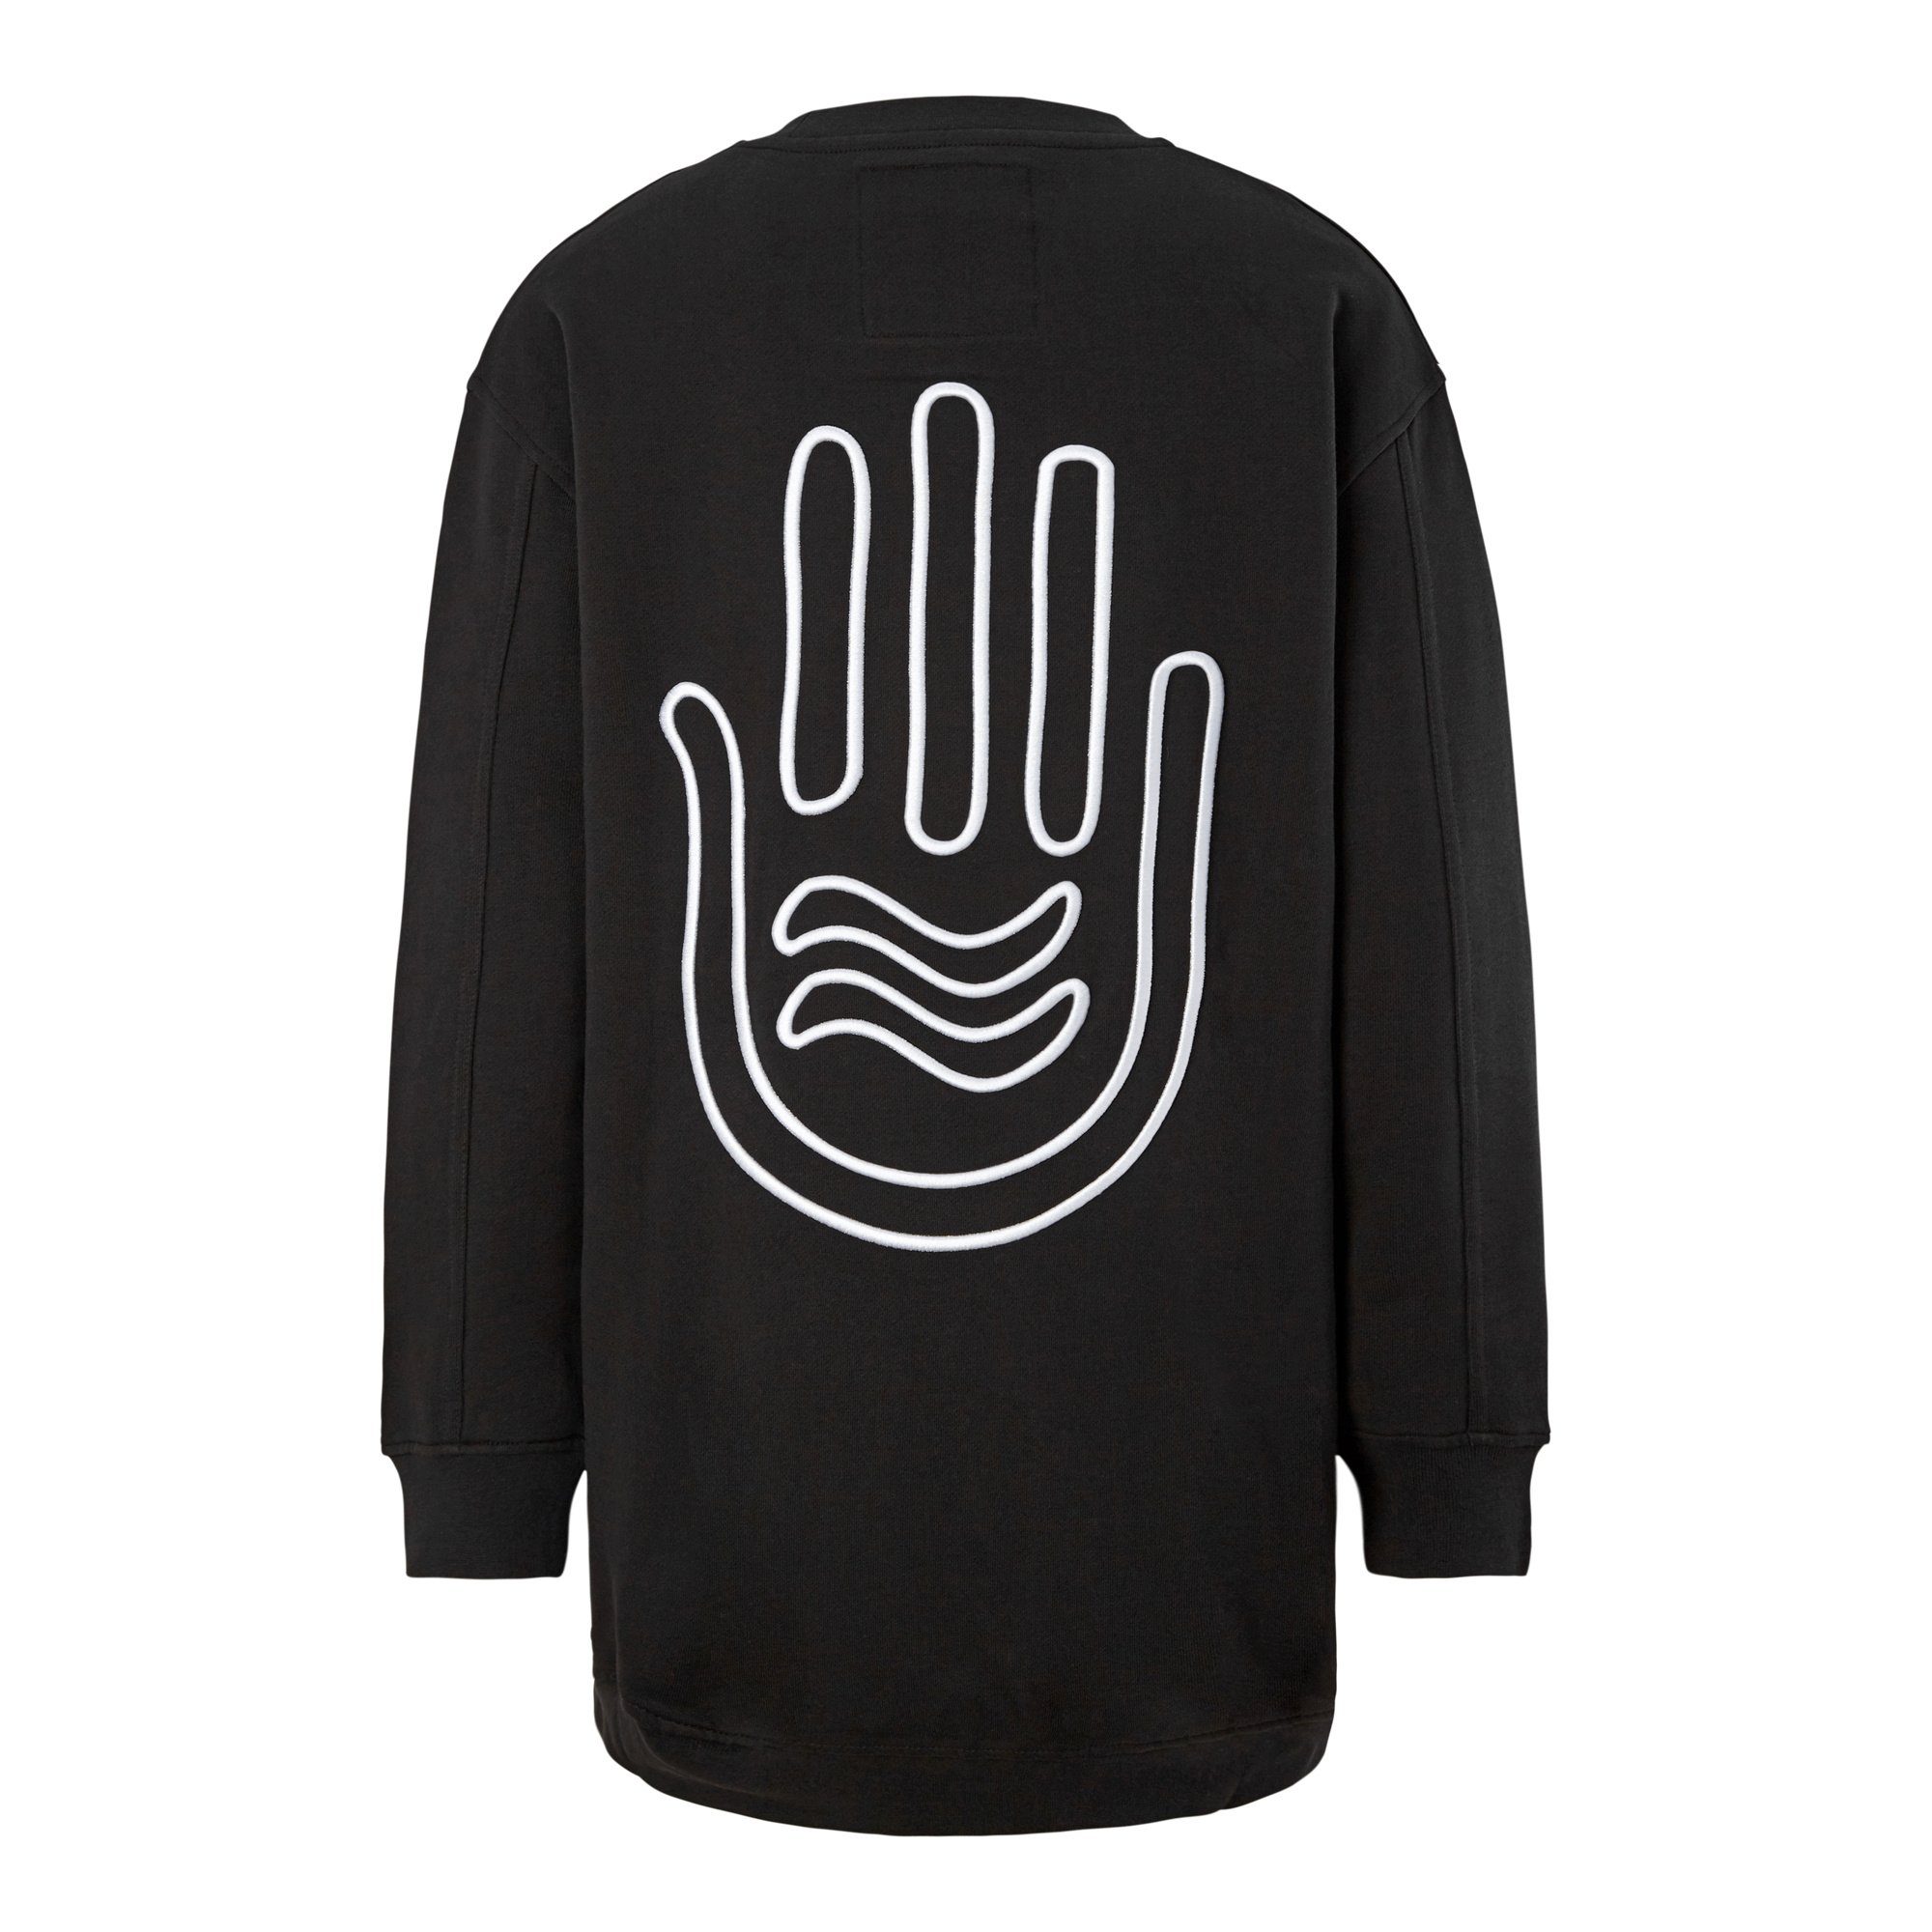 Sweatshirt SeaYA Biobaumwolle lang Stickerei Sweatshirt schwarz